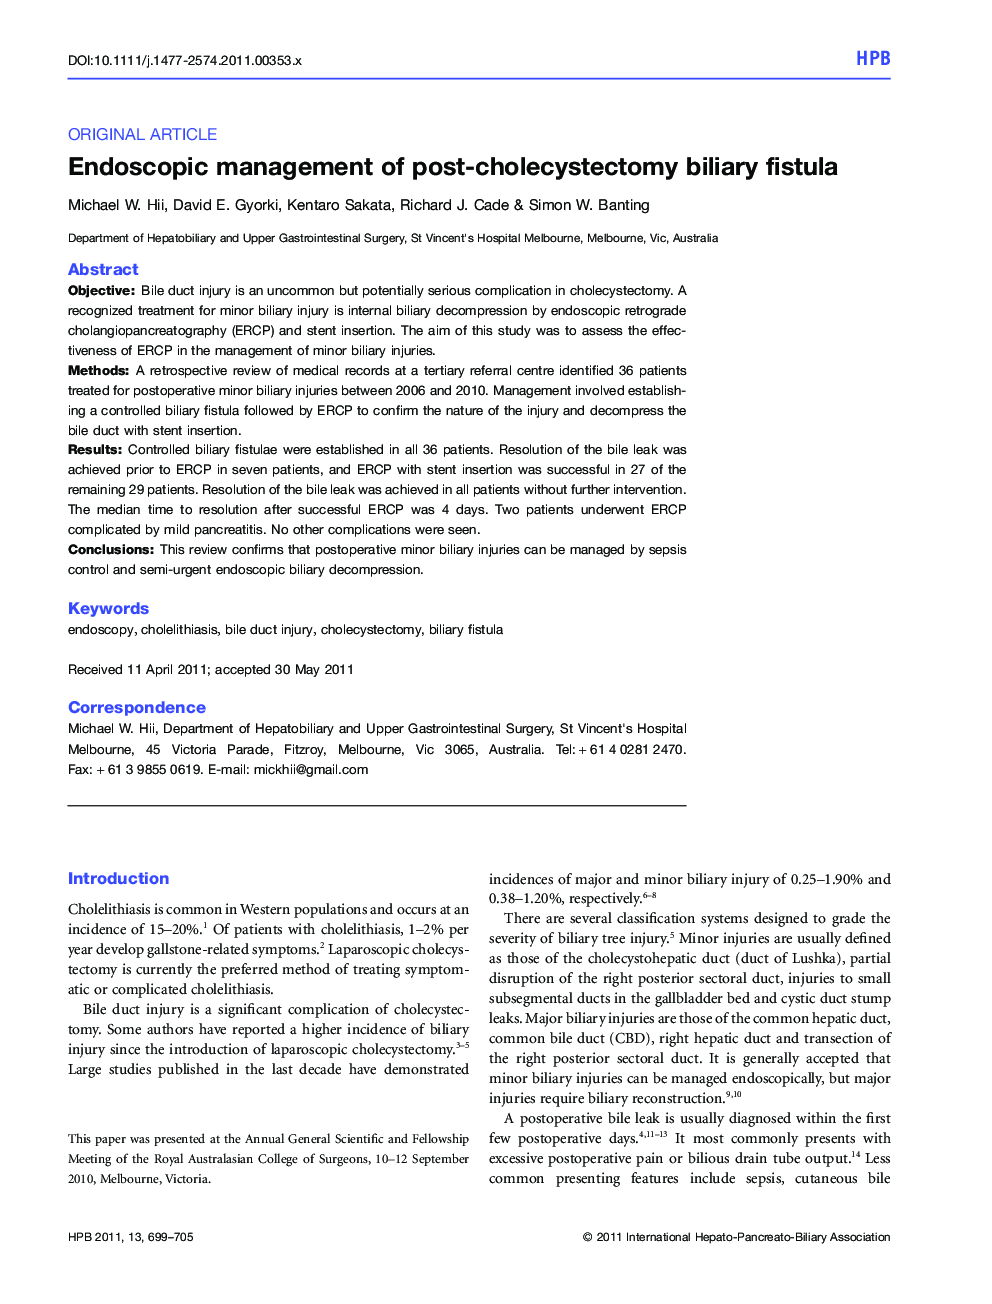 Endoscopic management of post-cholecystectomy biliary fistula